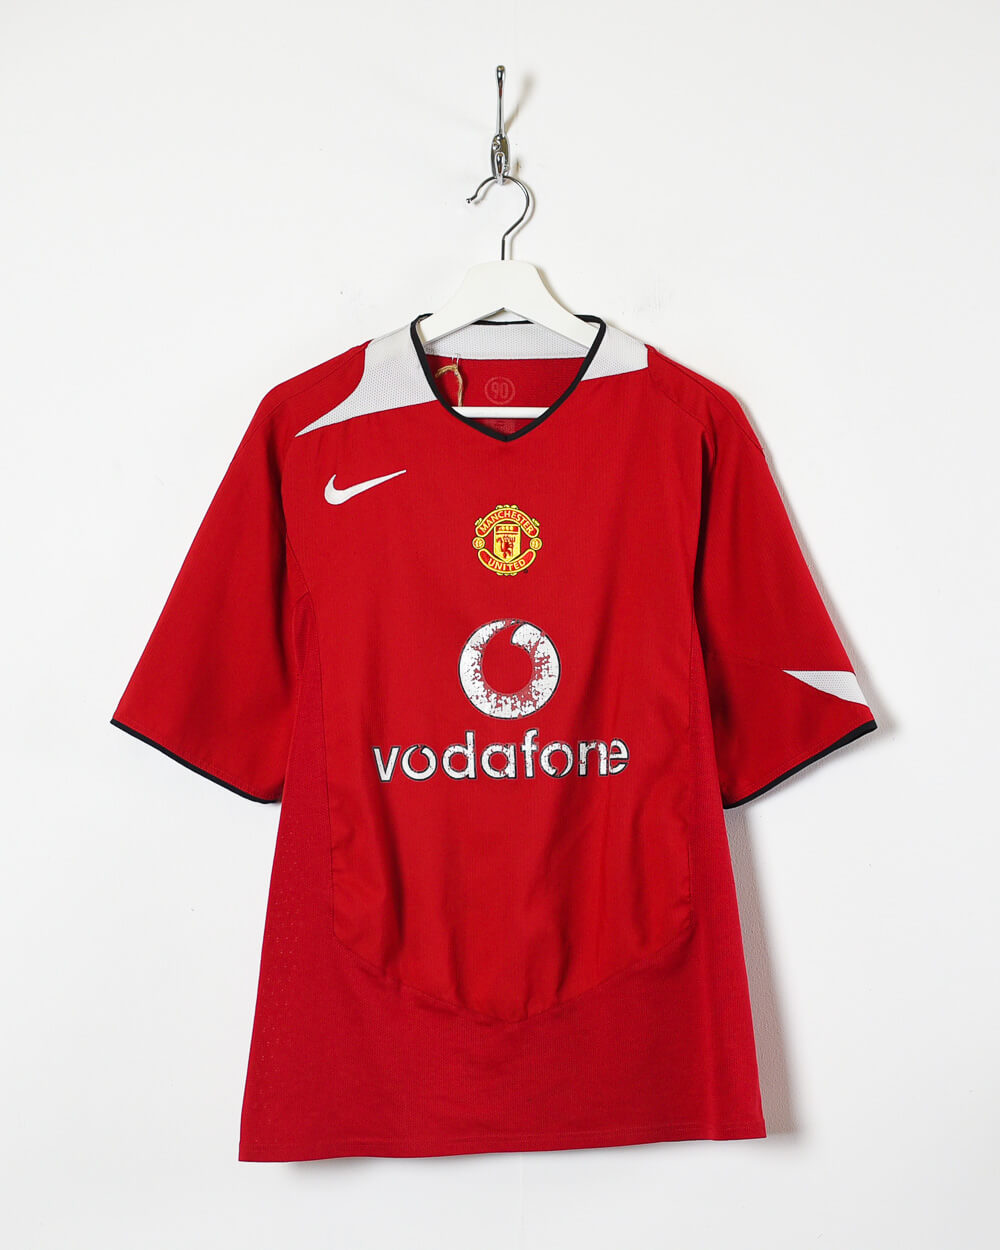 Red Nike Manchester United 2004/06 Home Football Shirt - Medium